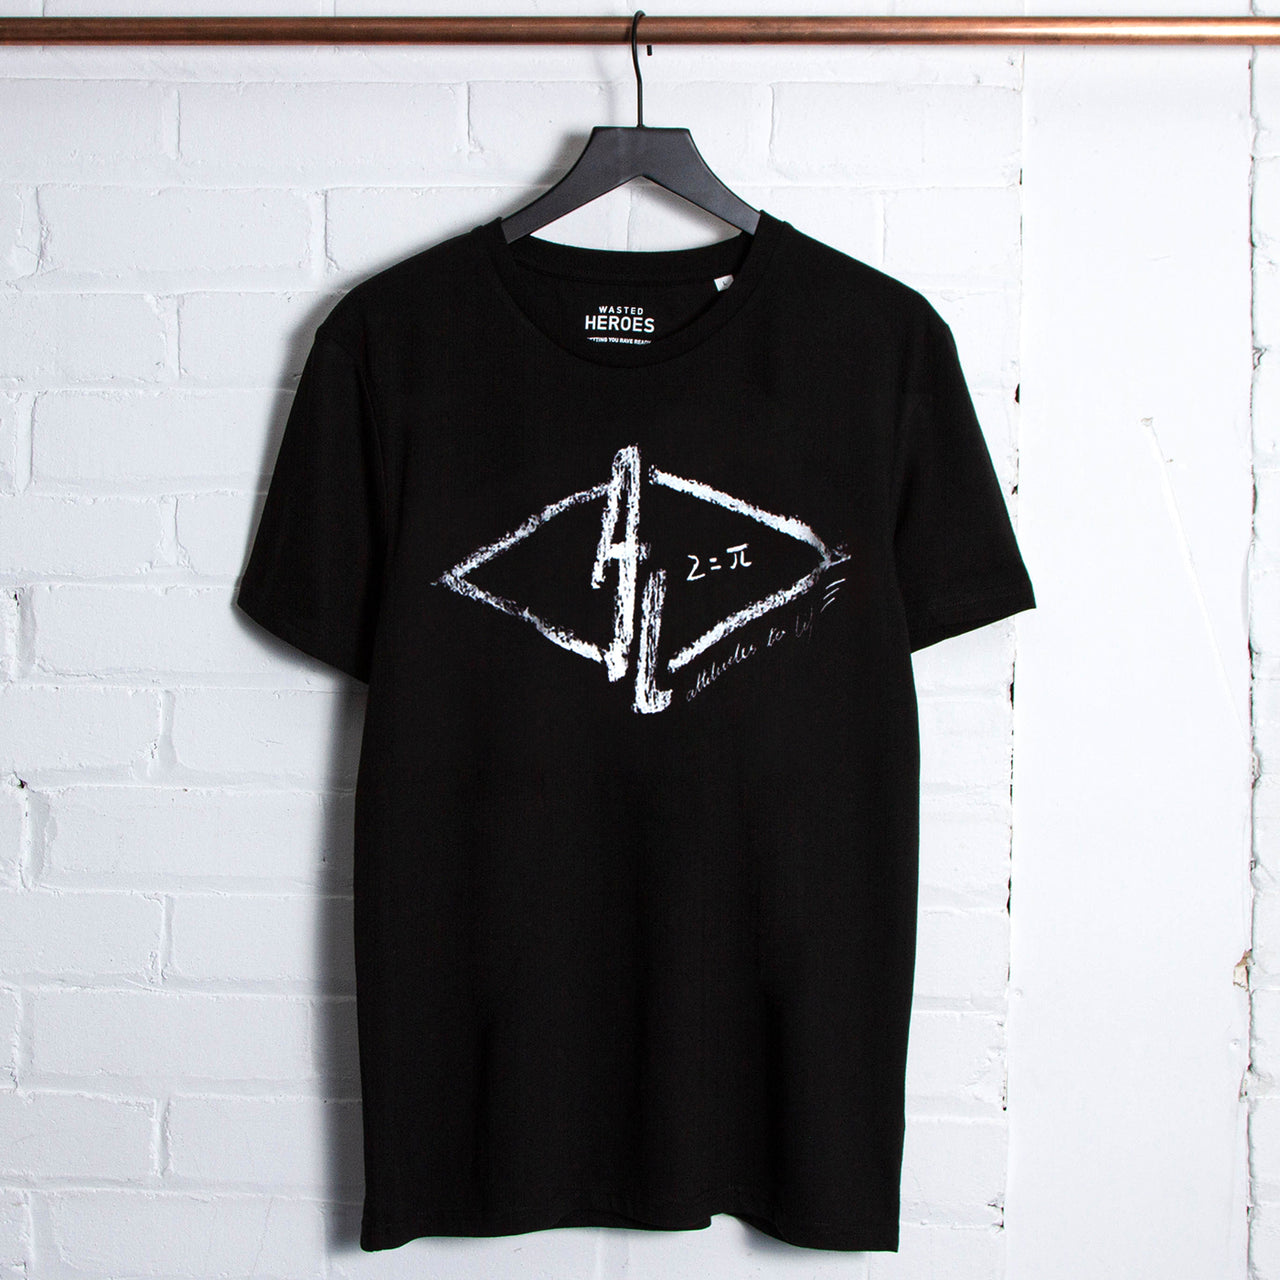 Matrefakt Attitudes To Life 005 Front Print - Tshirt - Black